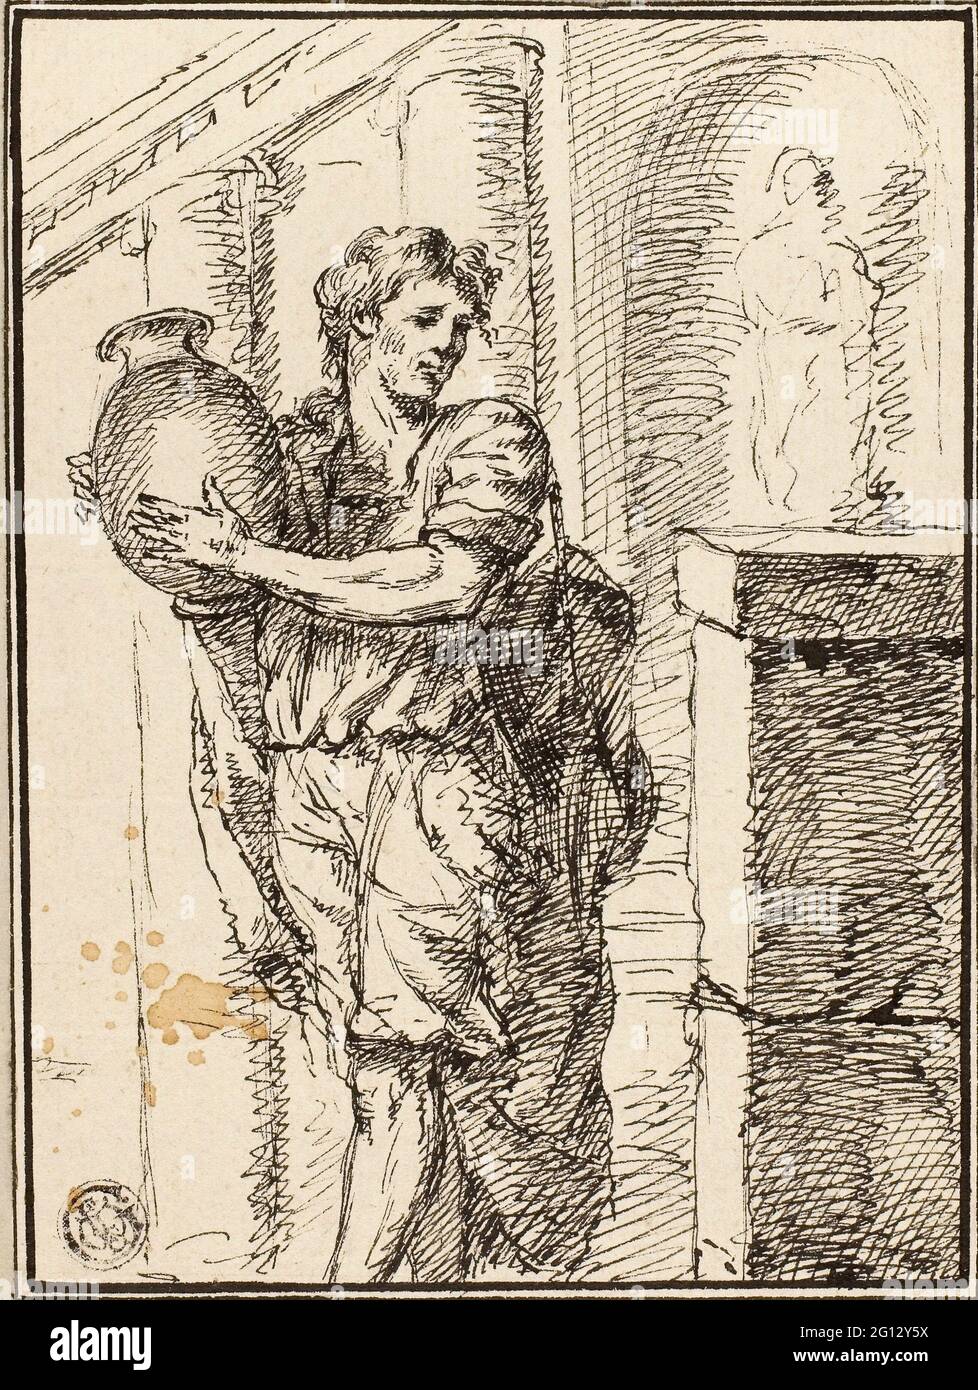 David Pierre Giottino Humbert de Superville. Man Holding Jar - 1785 - David Pierre Giottino Humbert de Superville Dutch, 1770-1849. Pen and black ink Stock Photo